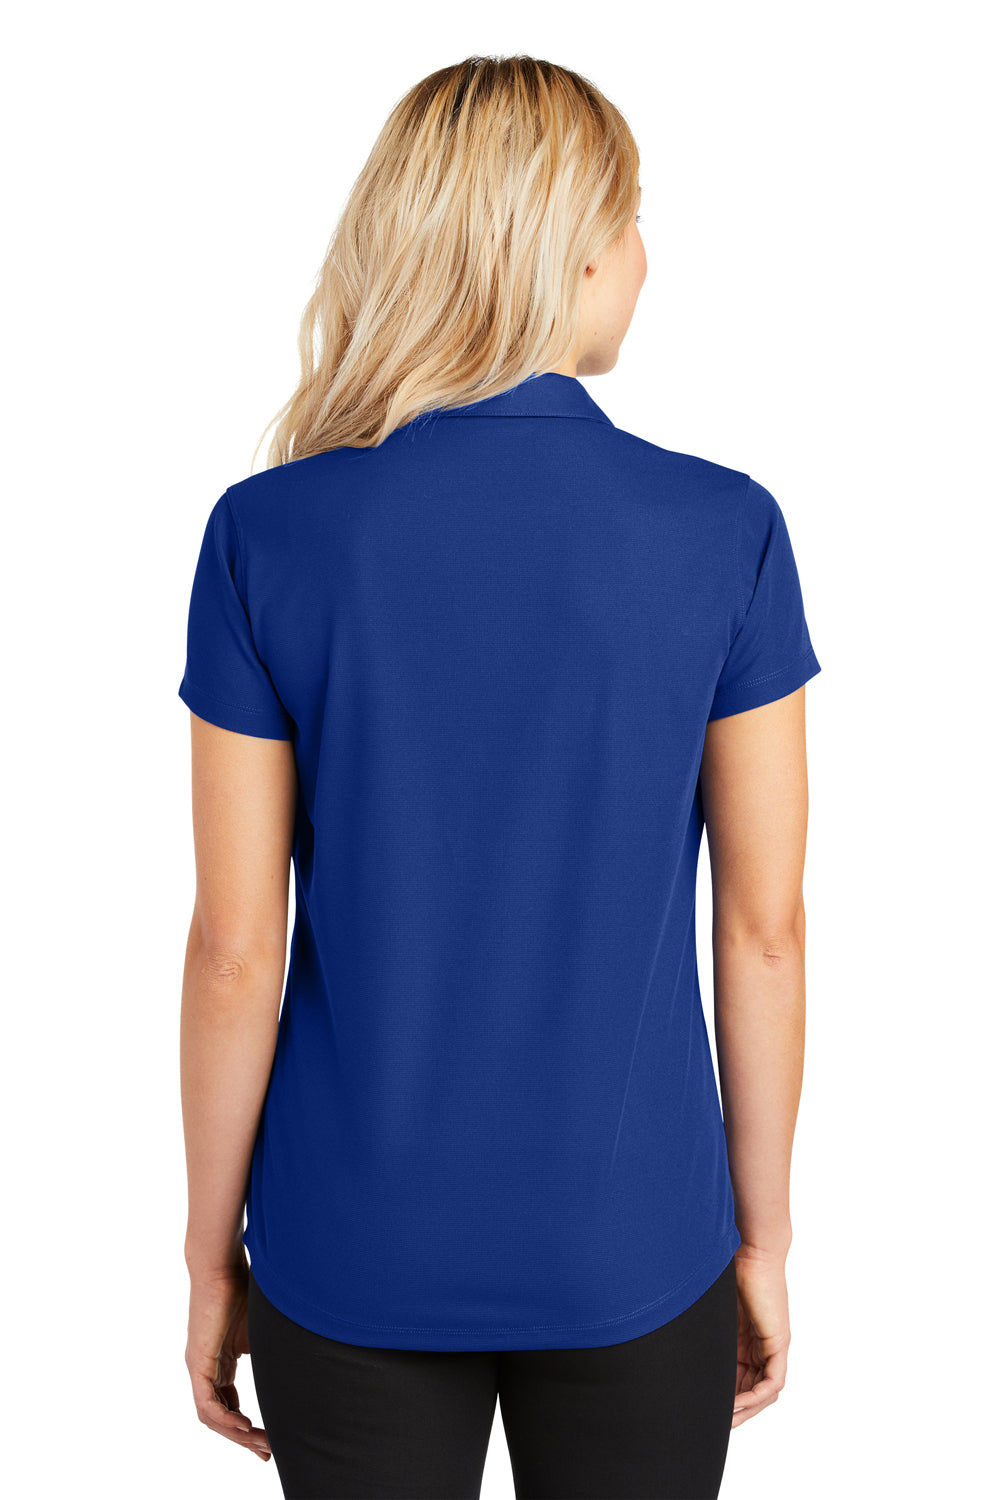 Port Authority L572 Womens Dry Zone Moisture Wicking Short Sleeve Polo Shirt True Royal Blue Back